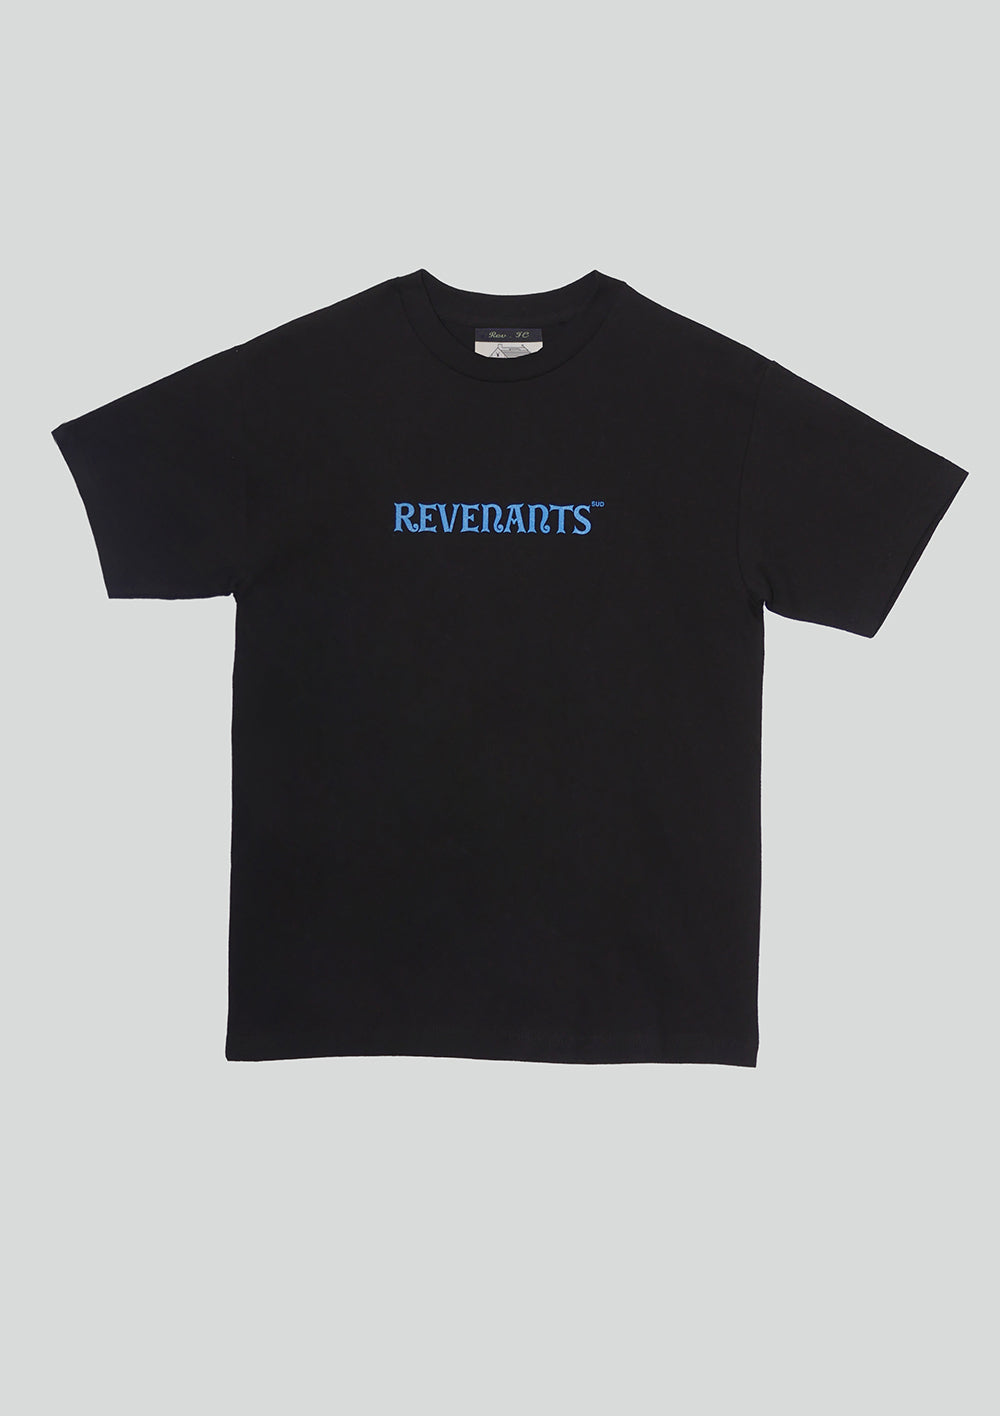 T-shirt Revenants Noir